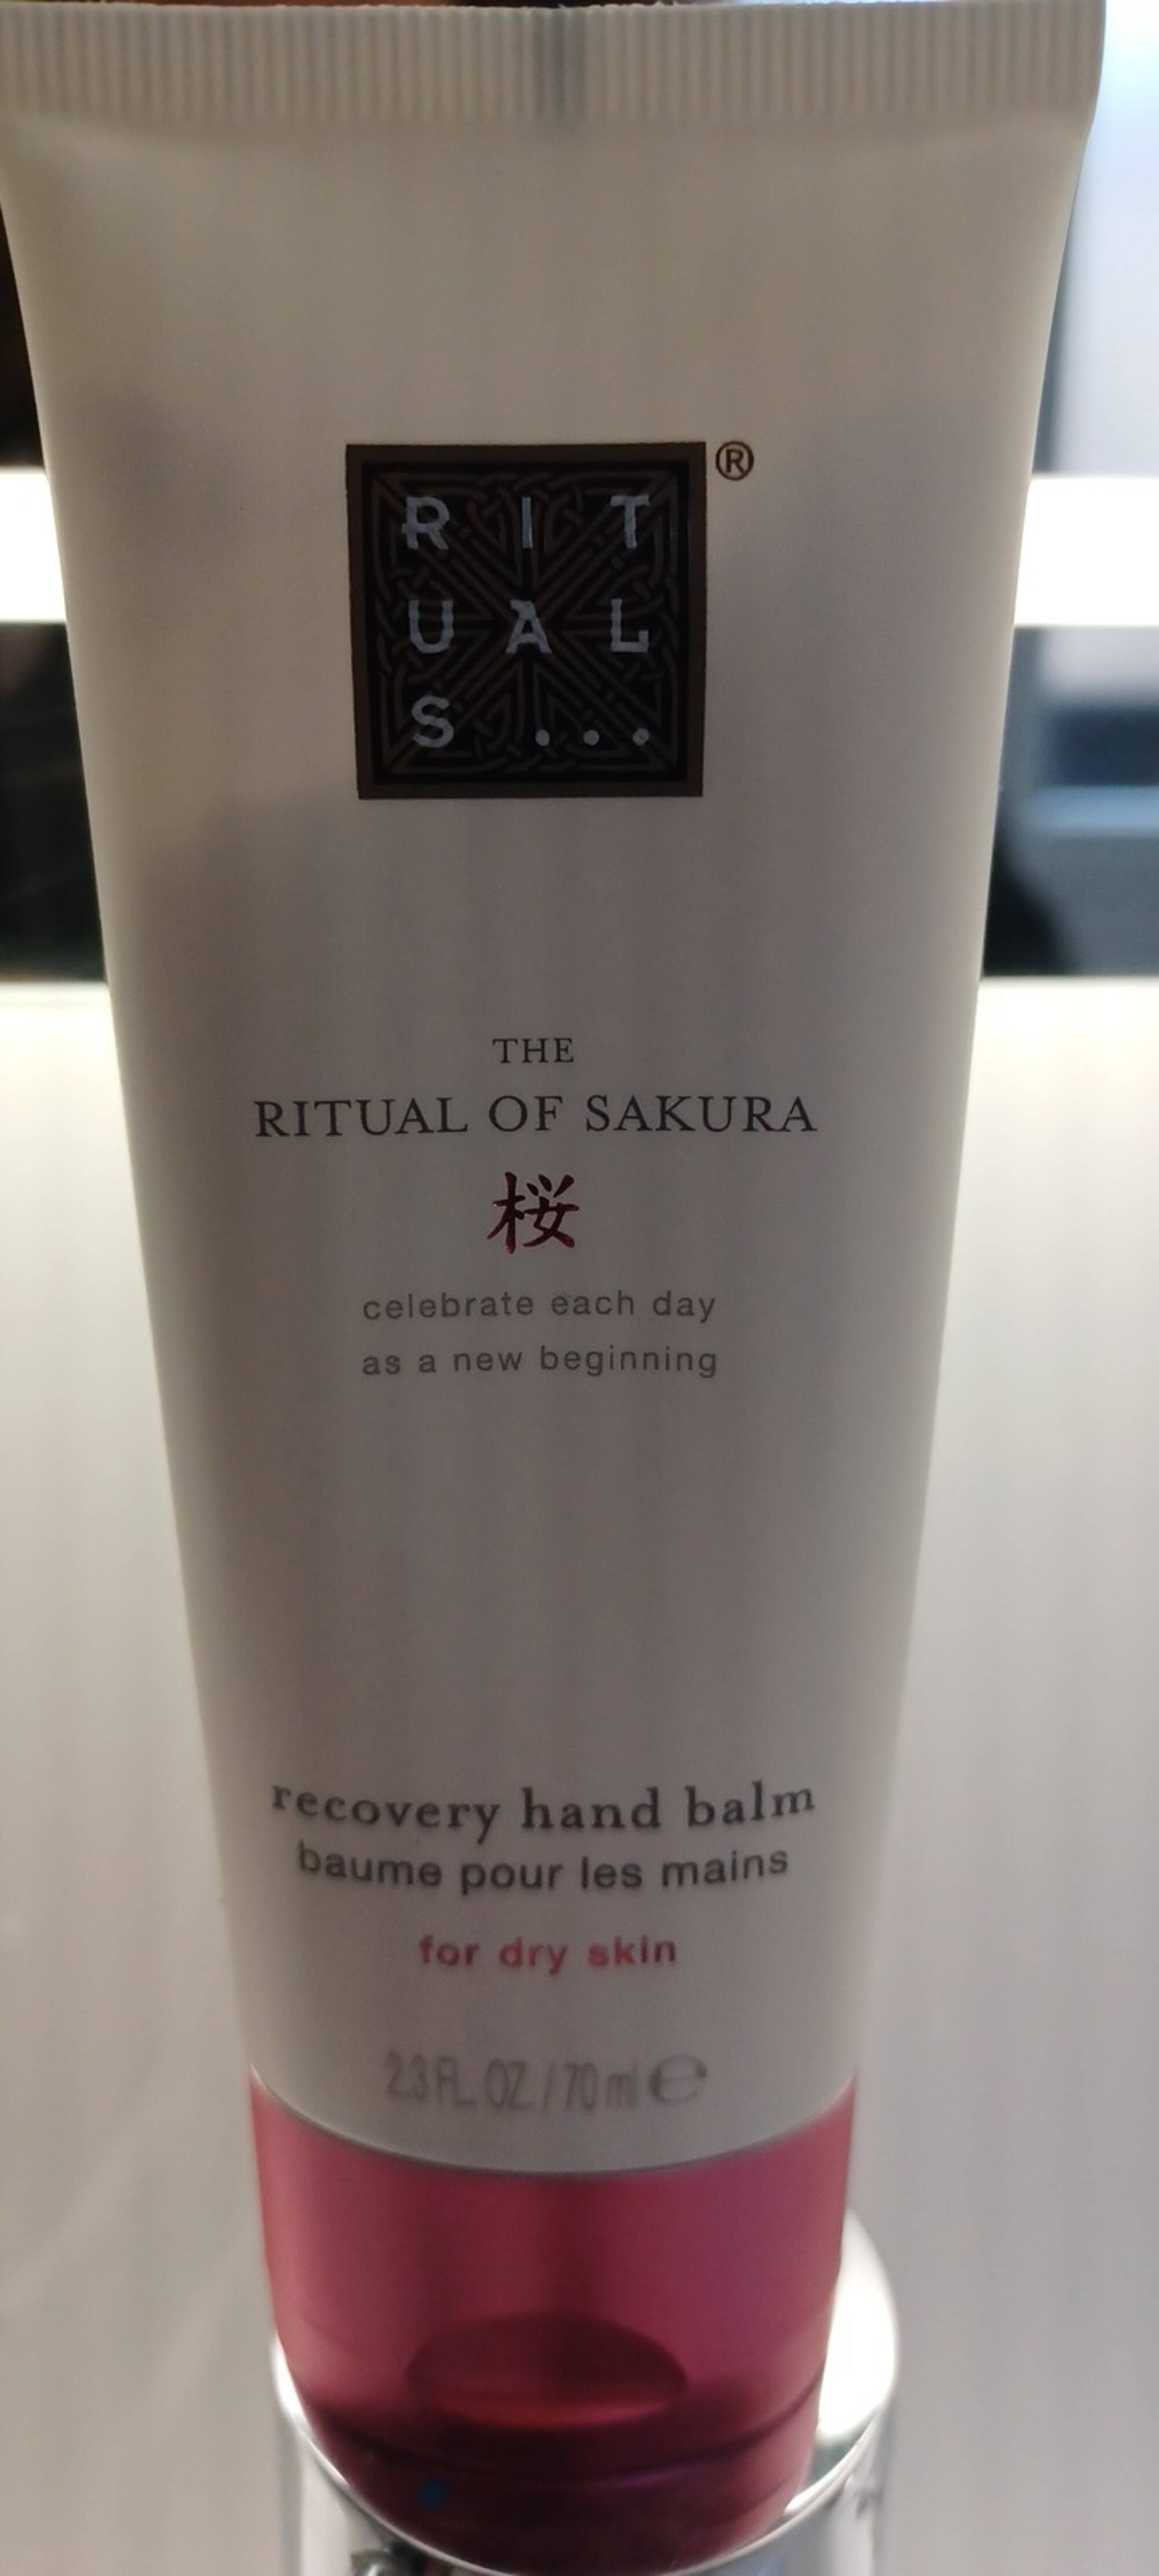 RITUALS - The ritual of Sakura - Baume pour les mains